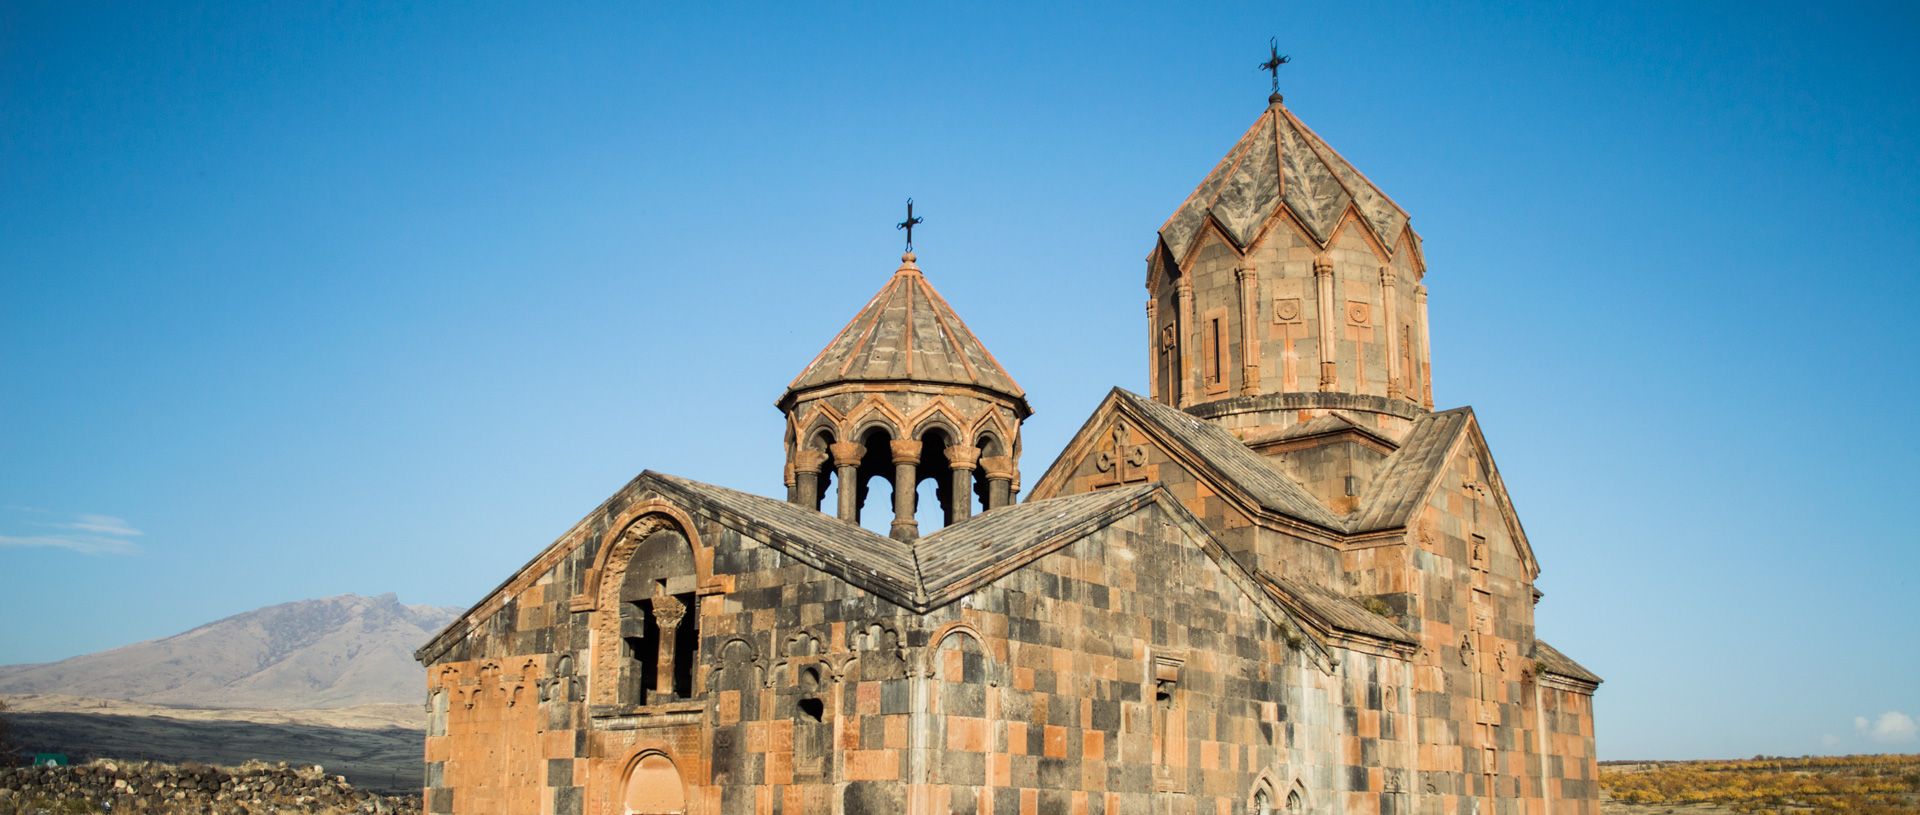 Hovhannavank Monastery, pilgrimage tours in Armenia.